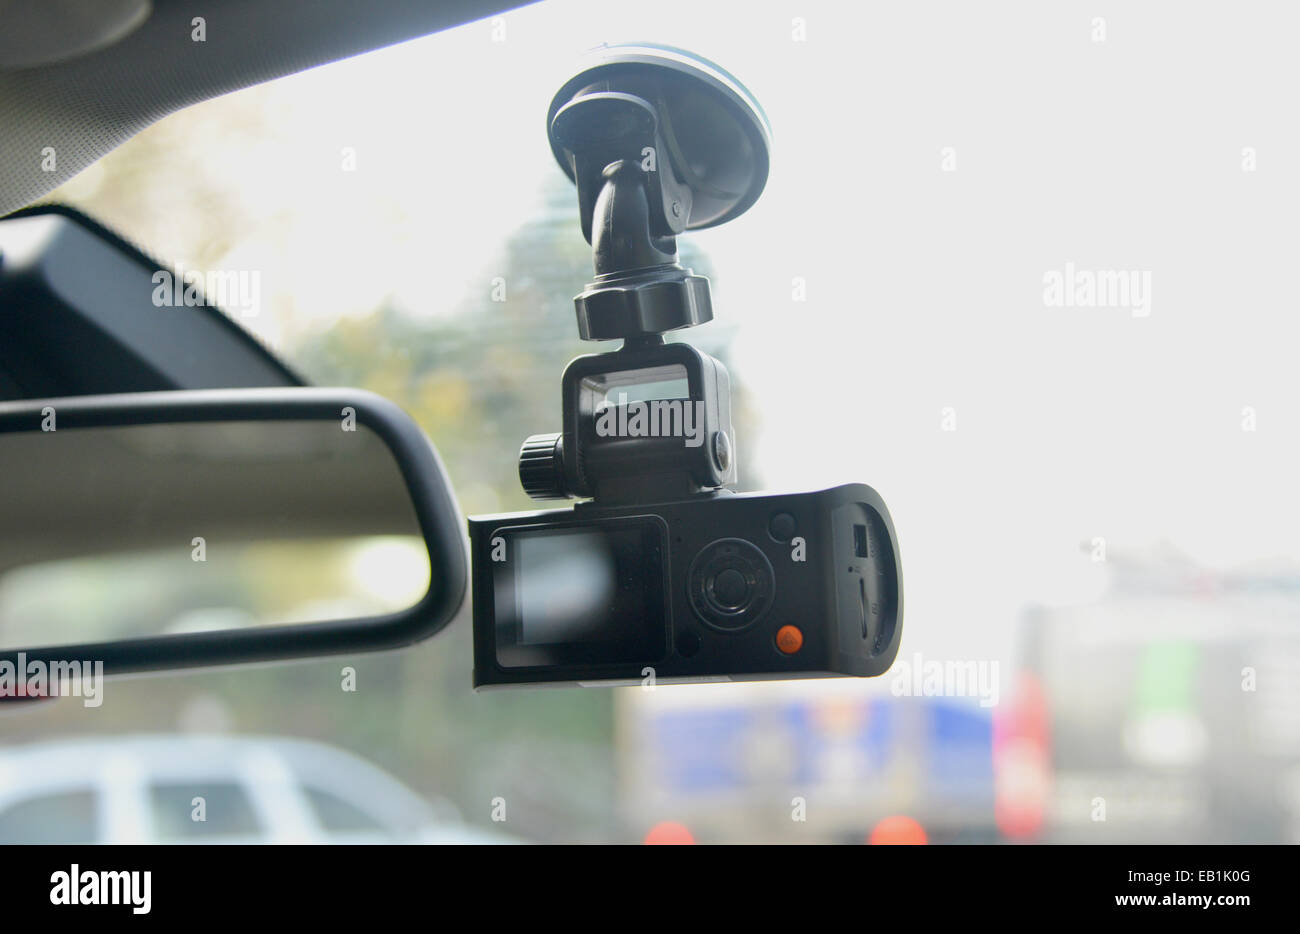 https://c8.alamy.com/comp/EB1K0G/dash-cam-car-windscreen-video-camera-EB1K0G.jpg